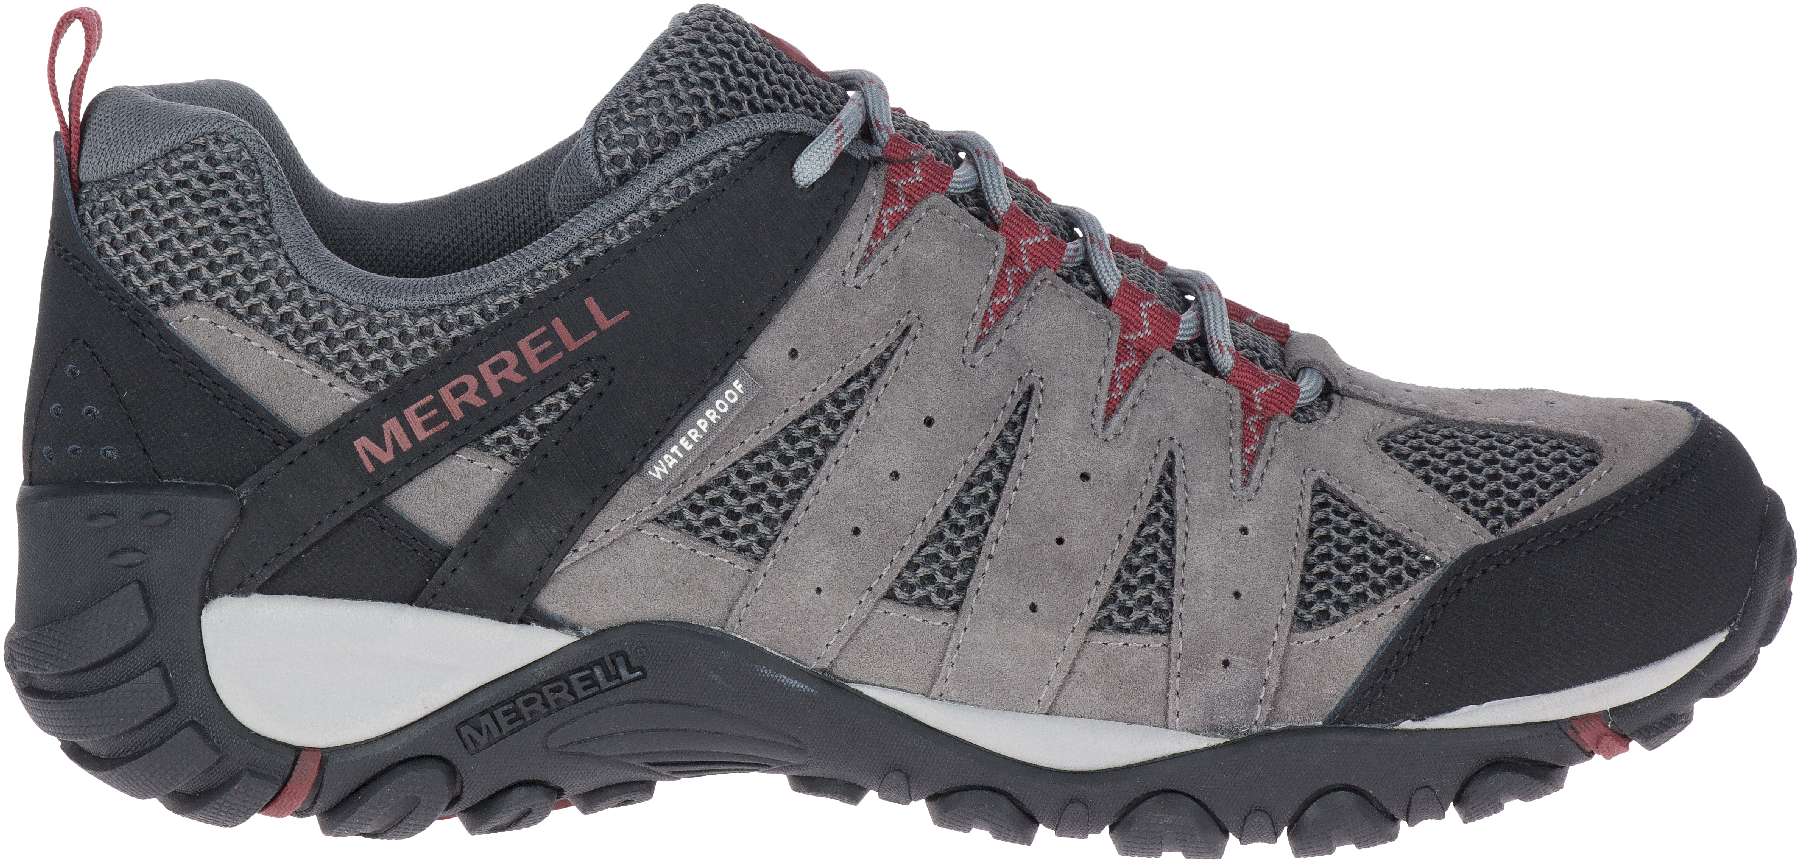 Merrell Accentor 2 Vent Wp - Walking shoes - Men's